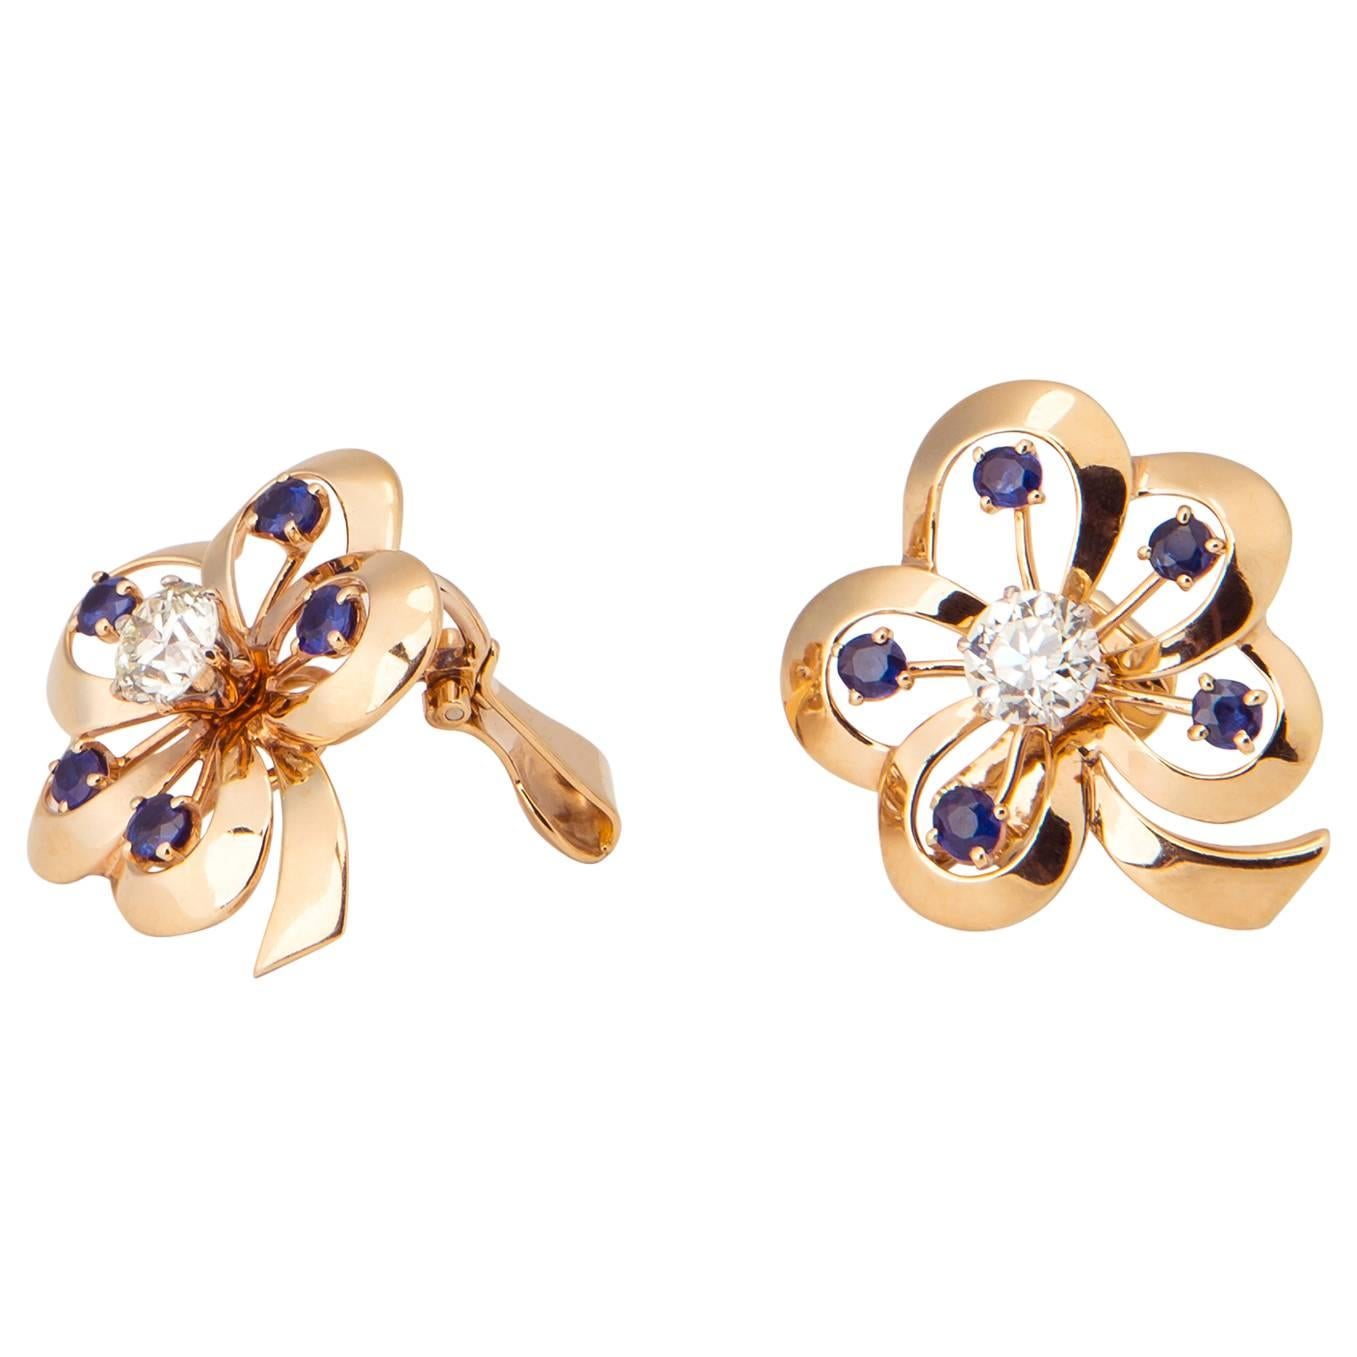 Trabert & Hoeffer Mauboussin Diamond and Sapphire Earrings